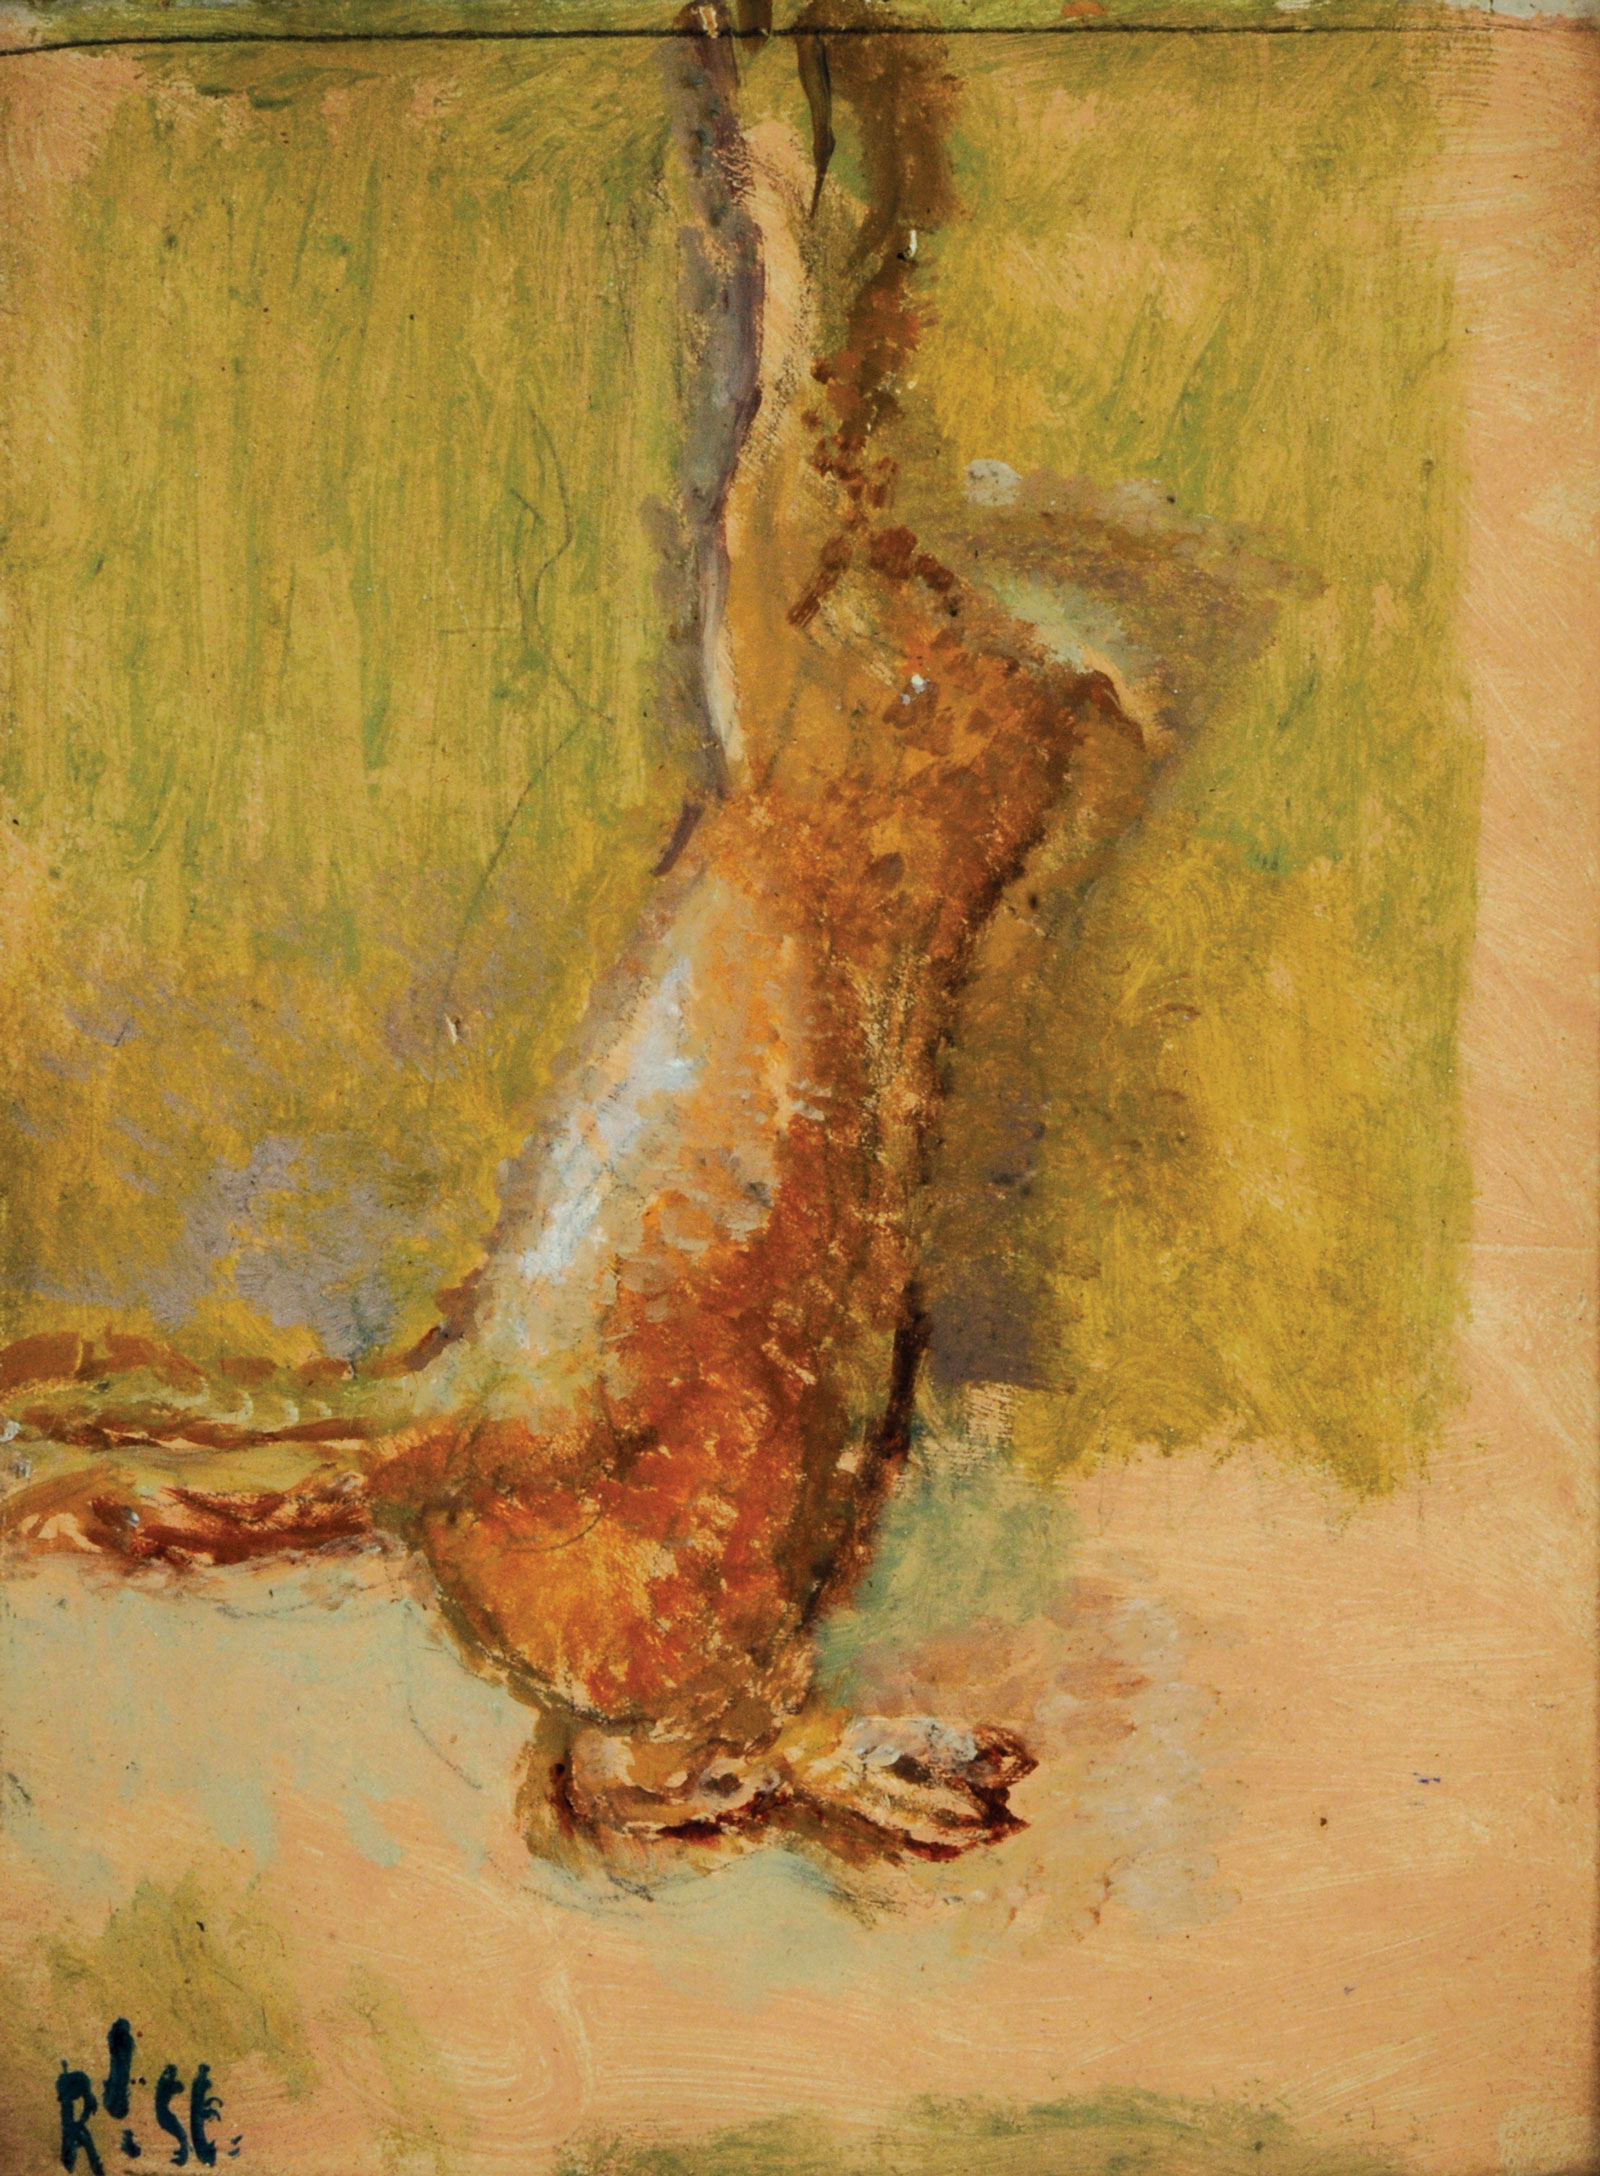 Walter Sickert, Dead Hare, date unknown. Courtesy Museums Sheffield.